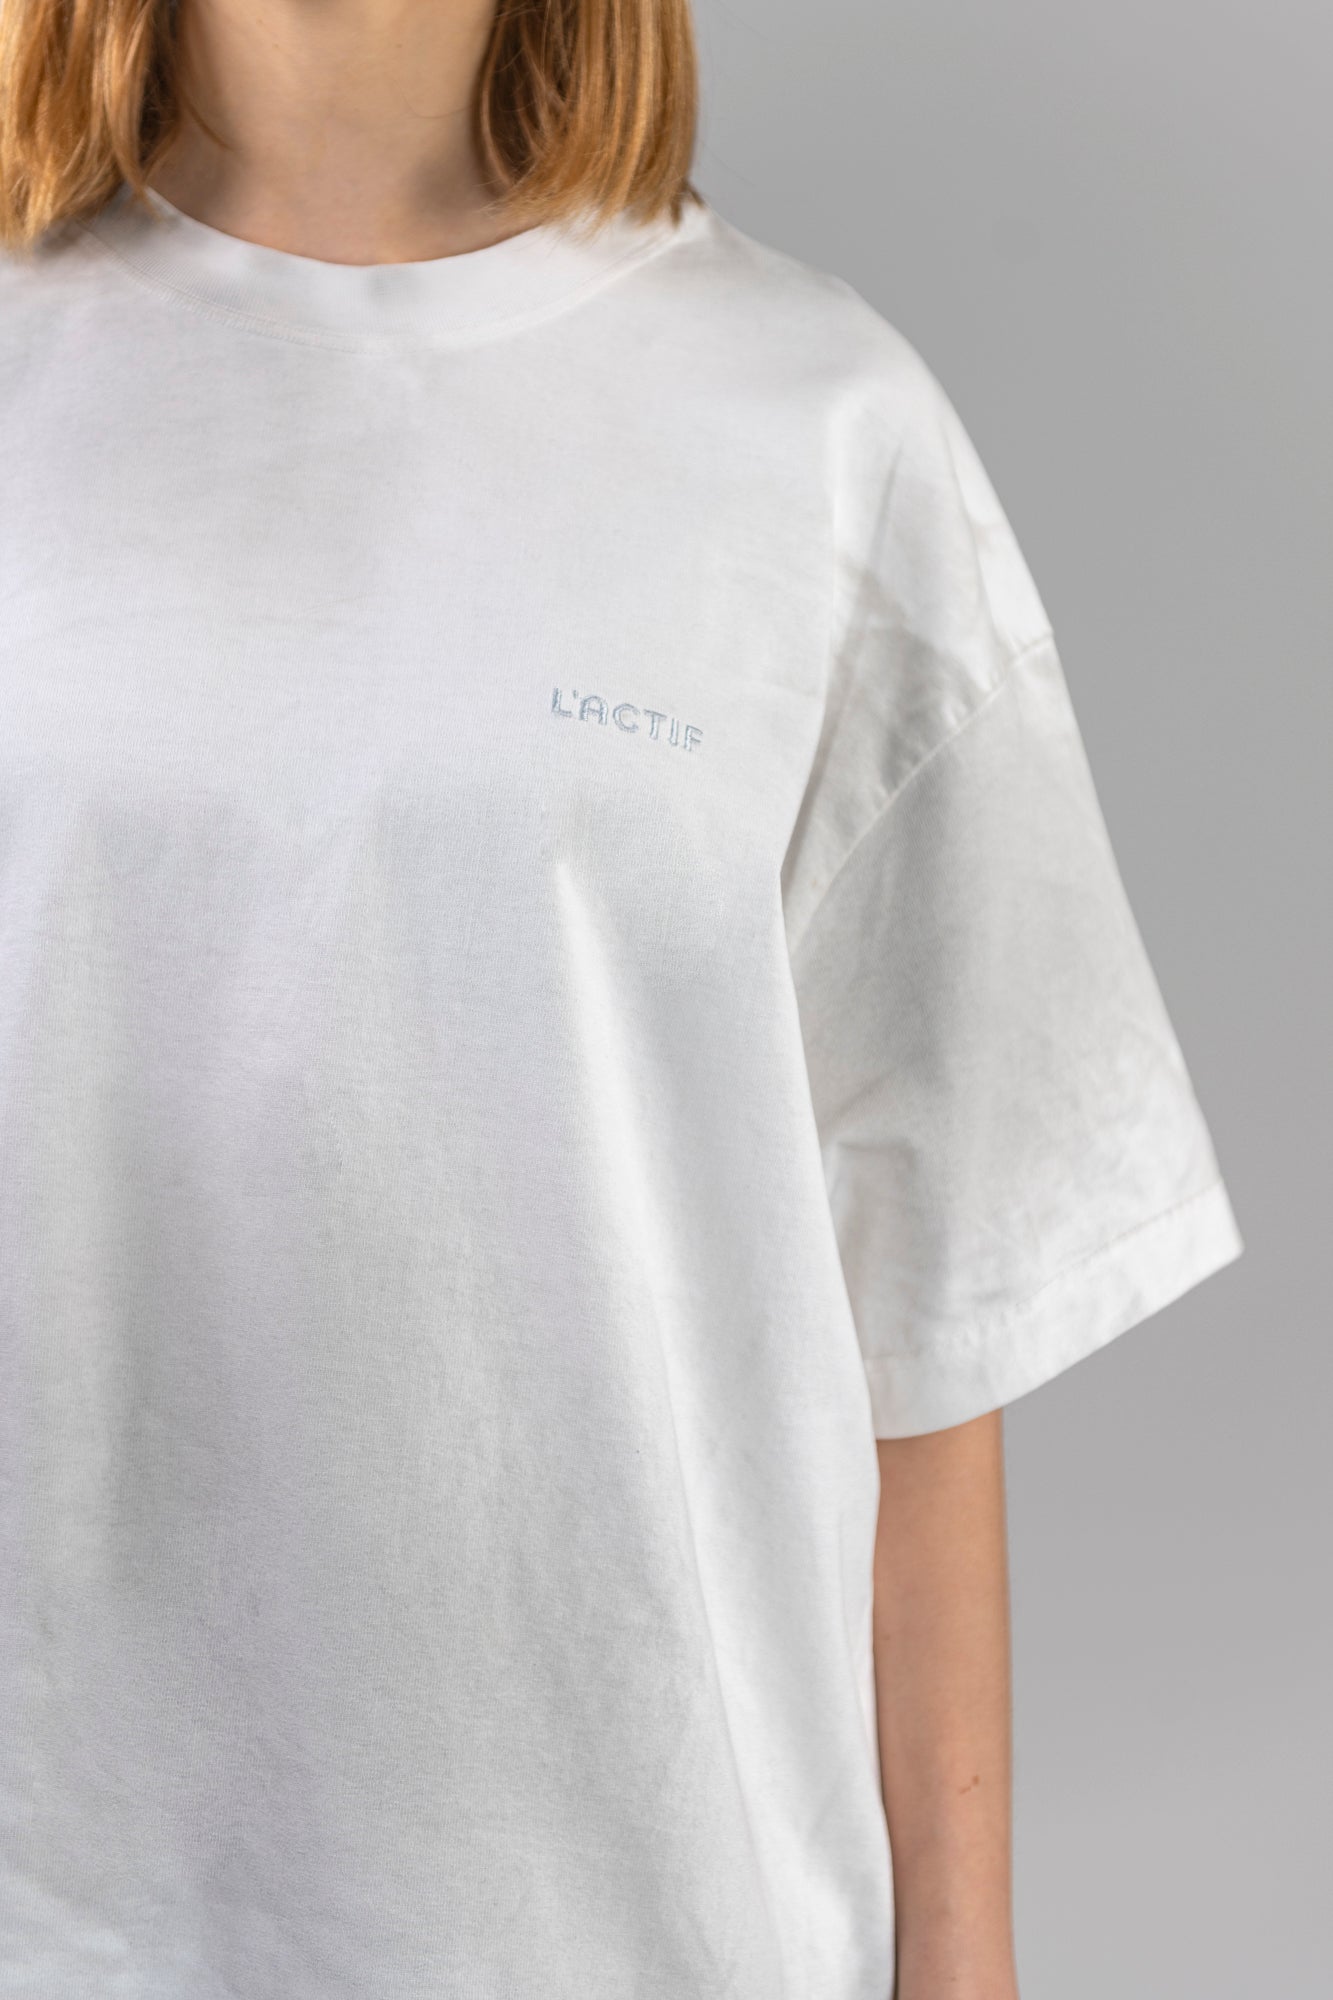 lactif-white-tshirt-female-logo-detail